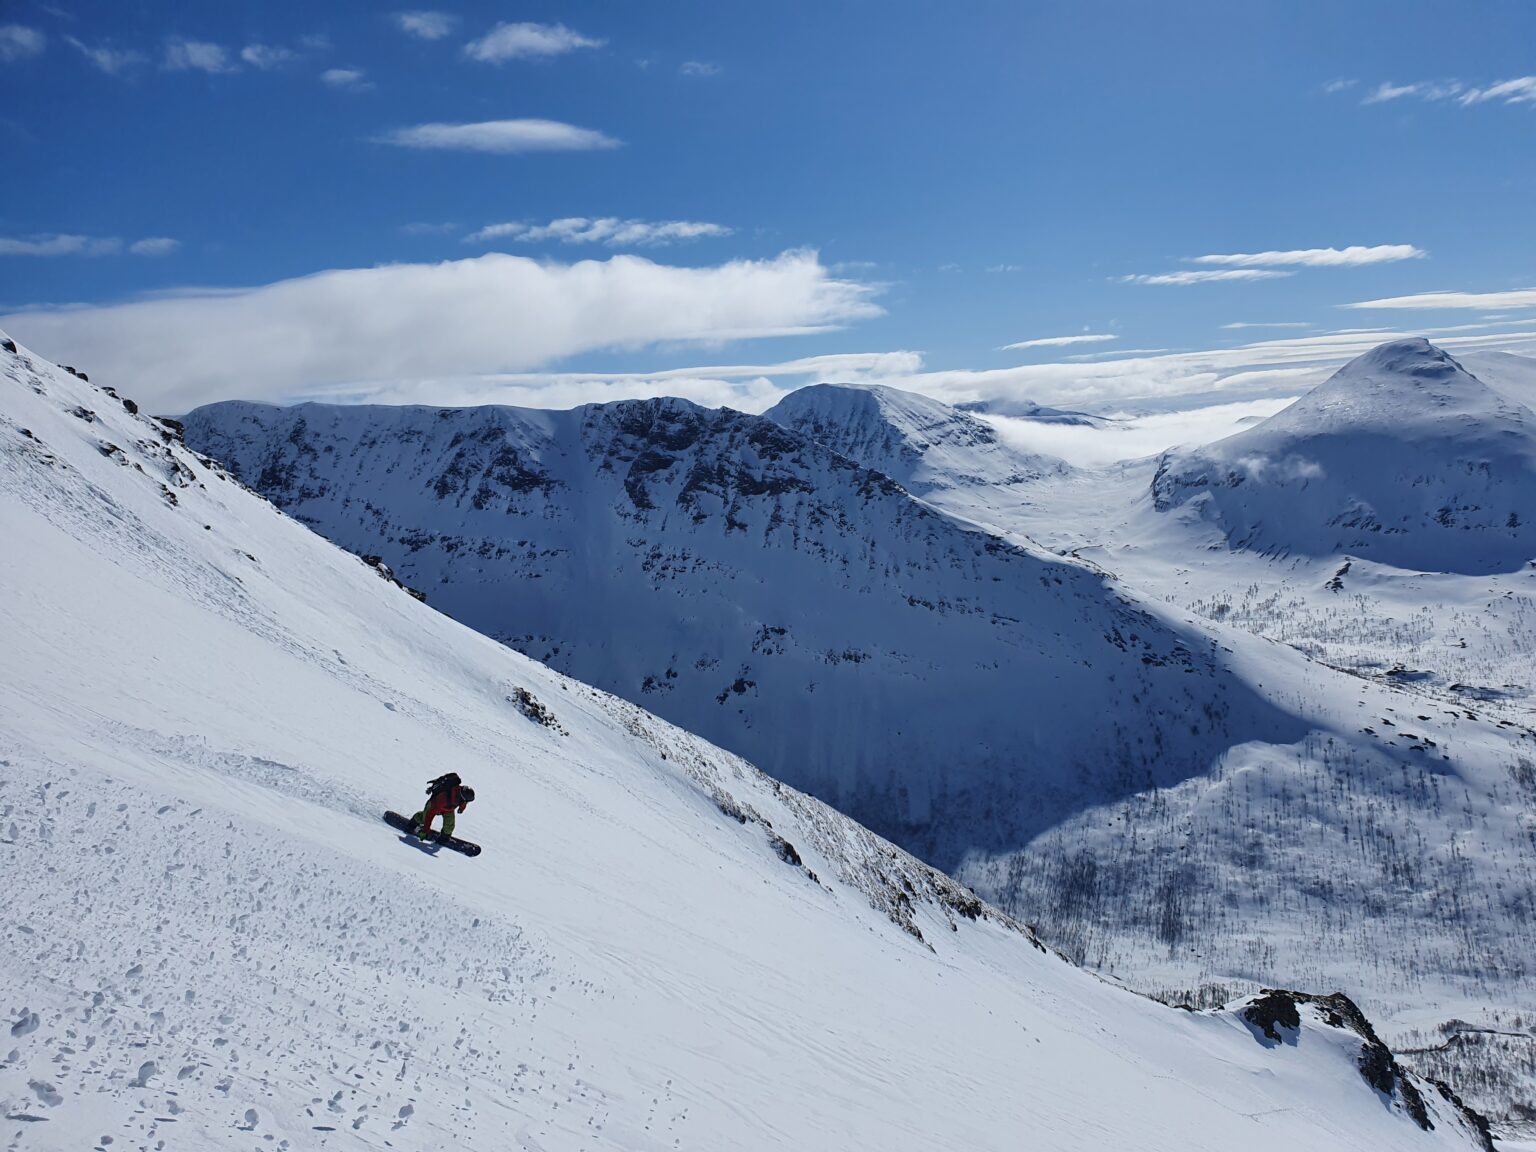 Snowboarding down the south chute of Tamokfjellet